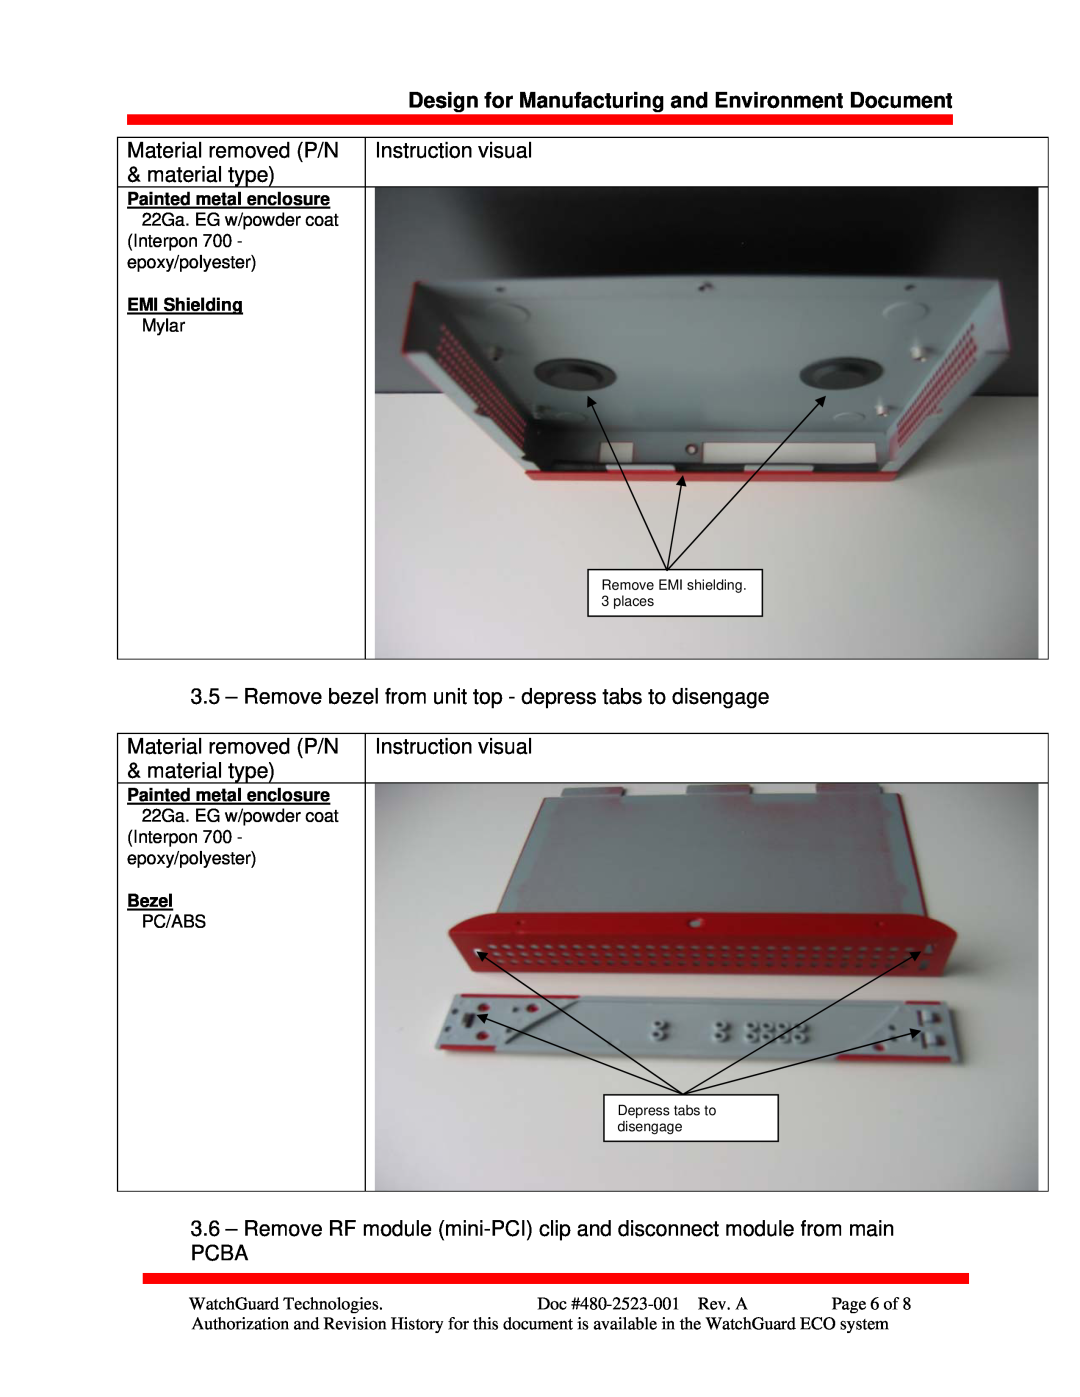 WatchGuard Technologies SOHO 6 manual Remove EMI shielding. 3 places, Depress tabs to disengage 